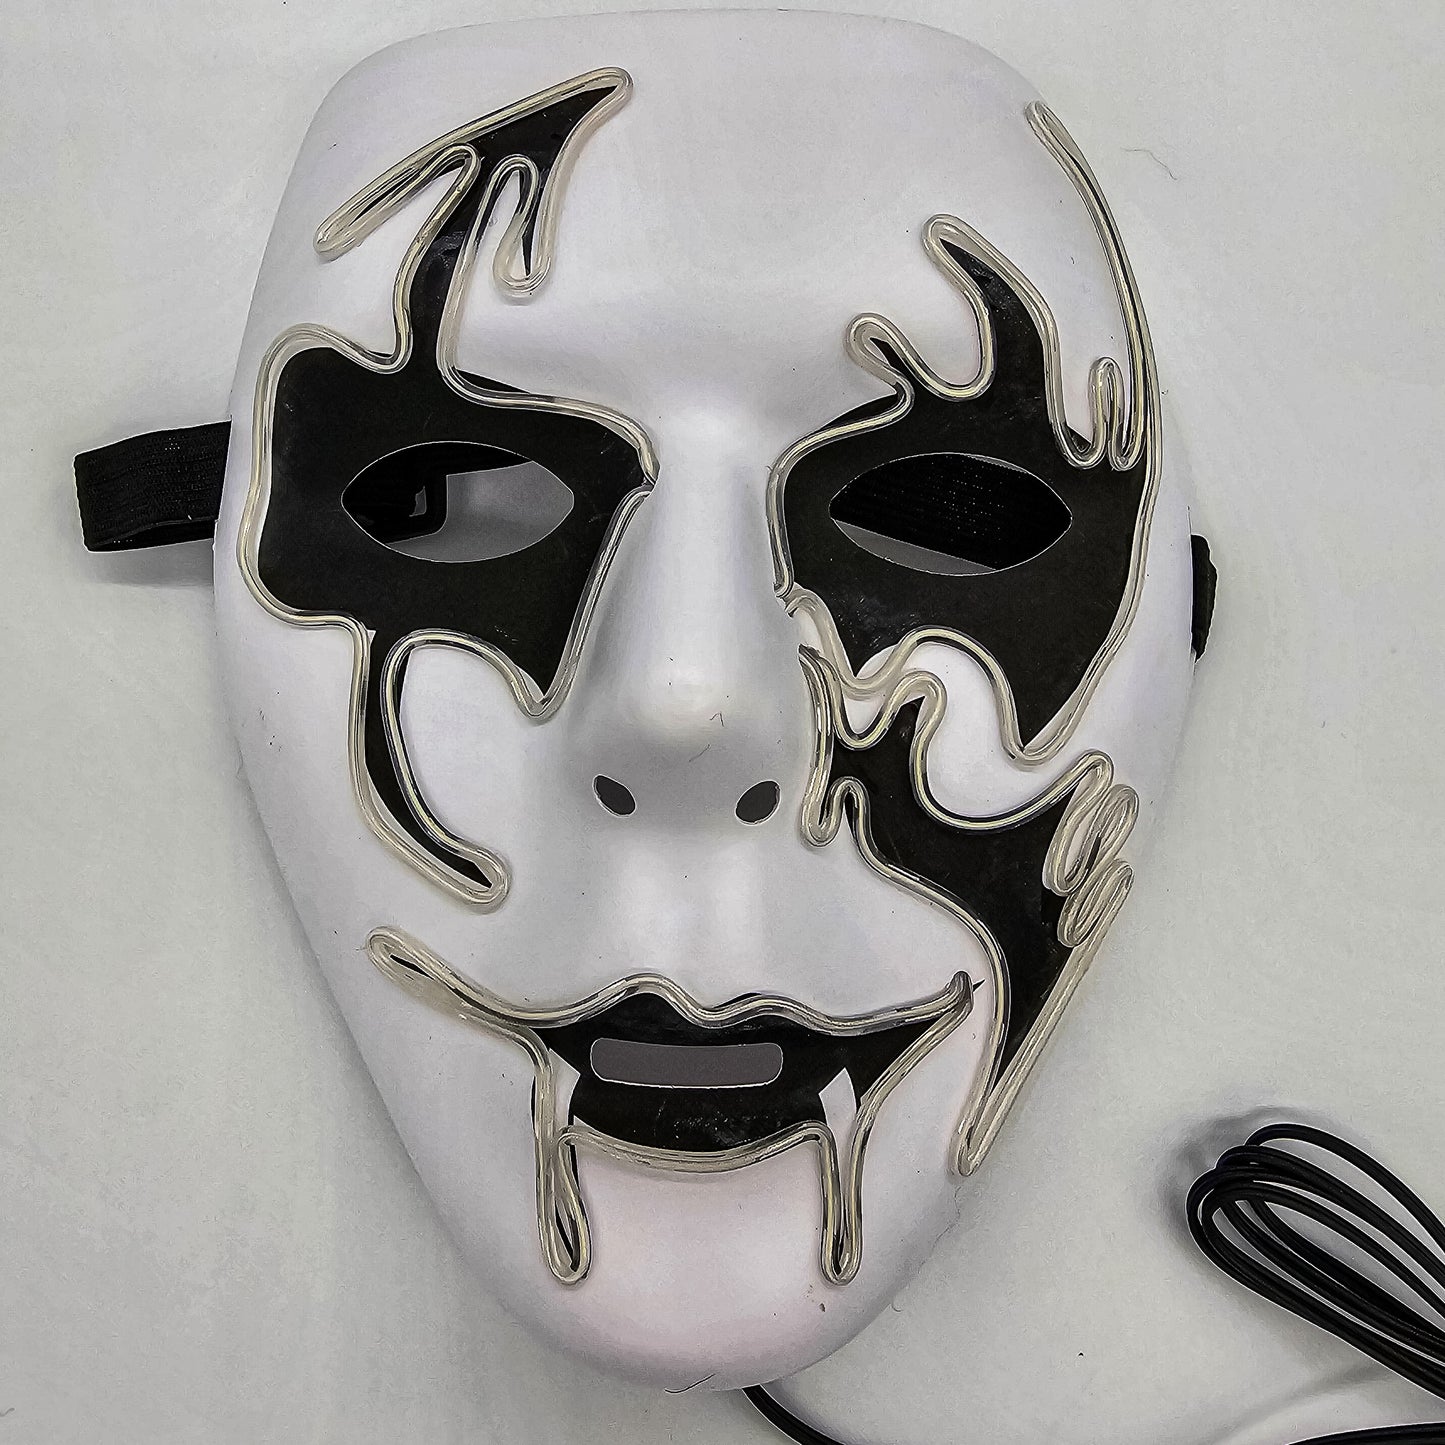 LED Phantom Vampire Mask